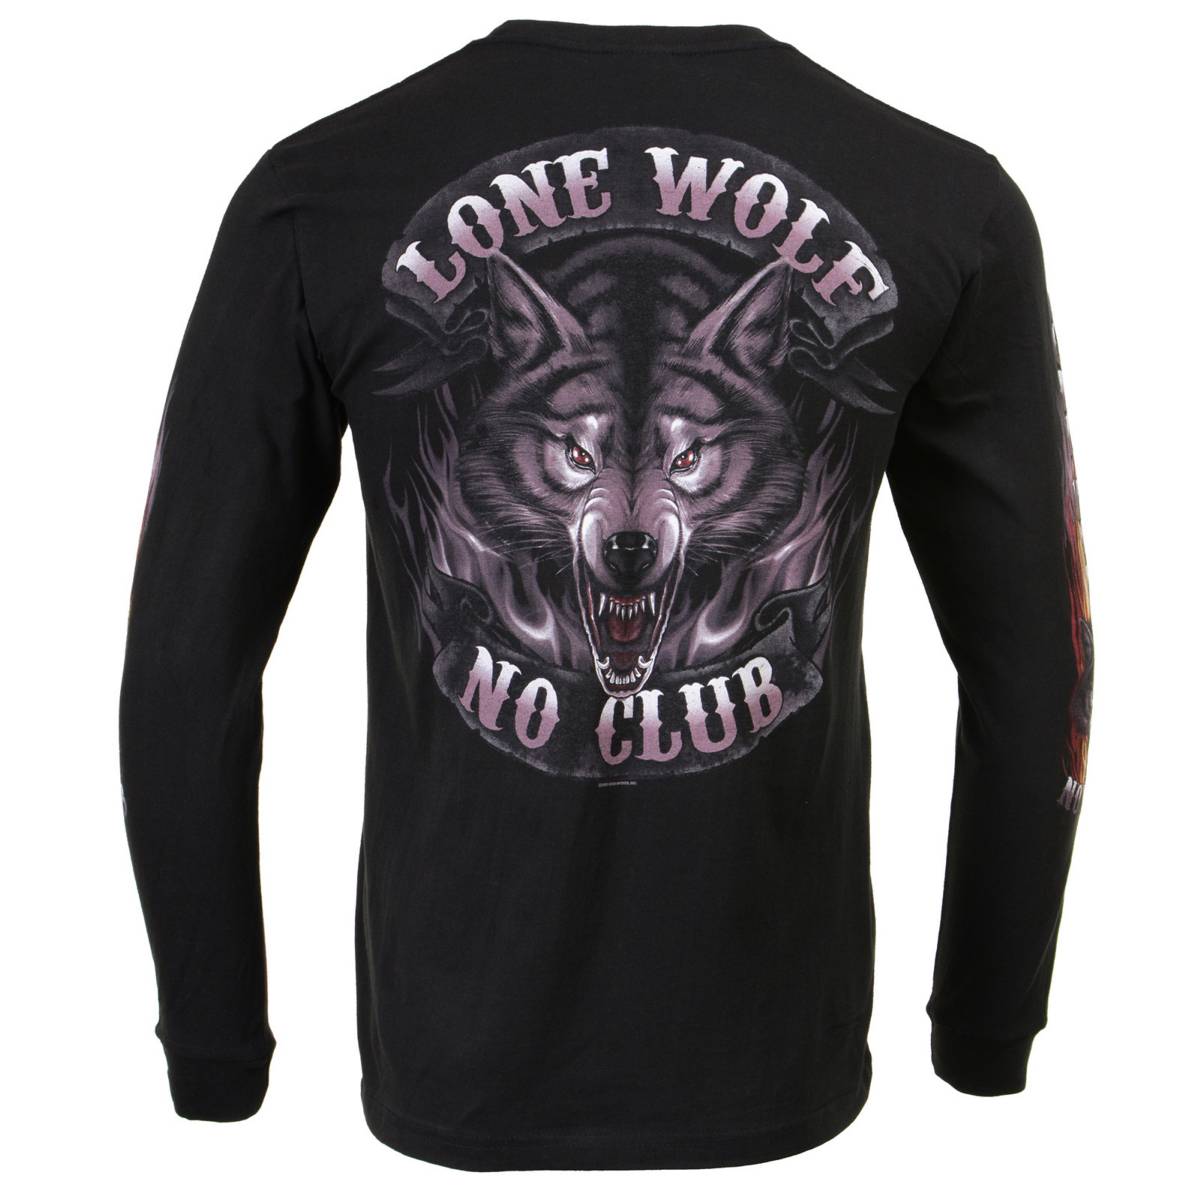 Milwaukee Leather MPMH117001 Men's 'Lone Wolf No Club' Biker Long Sleeve T-Shirt